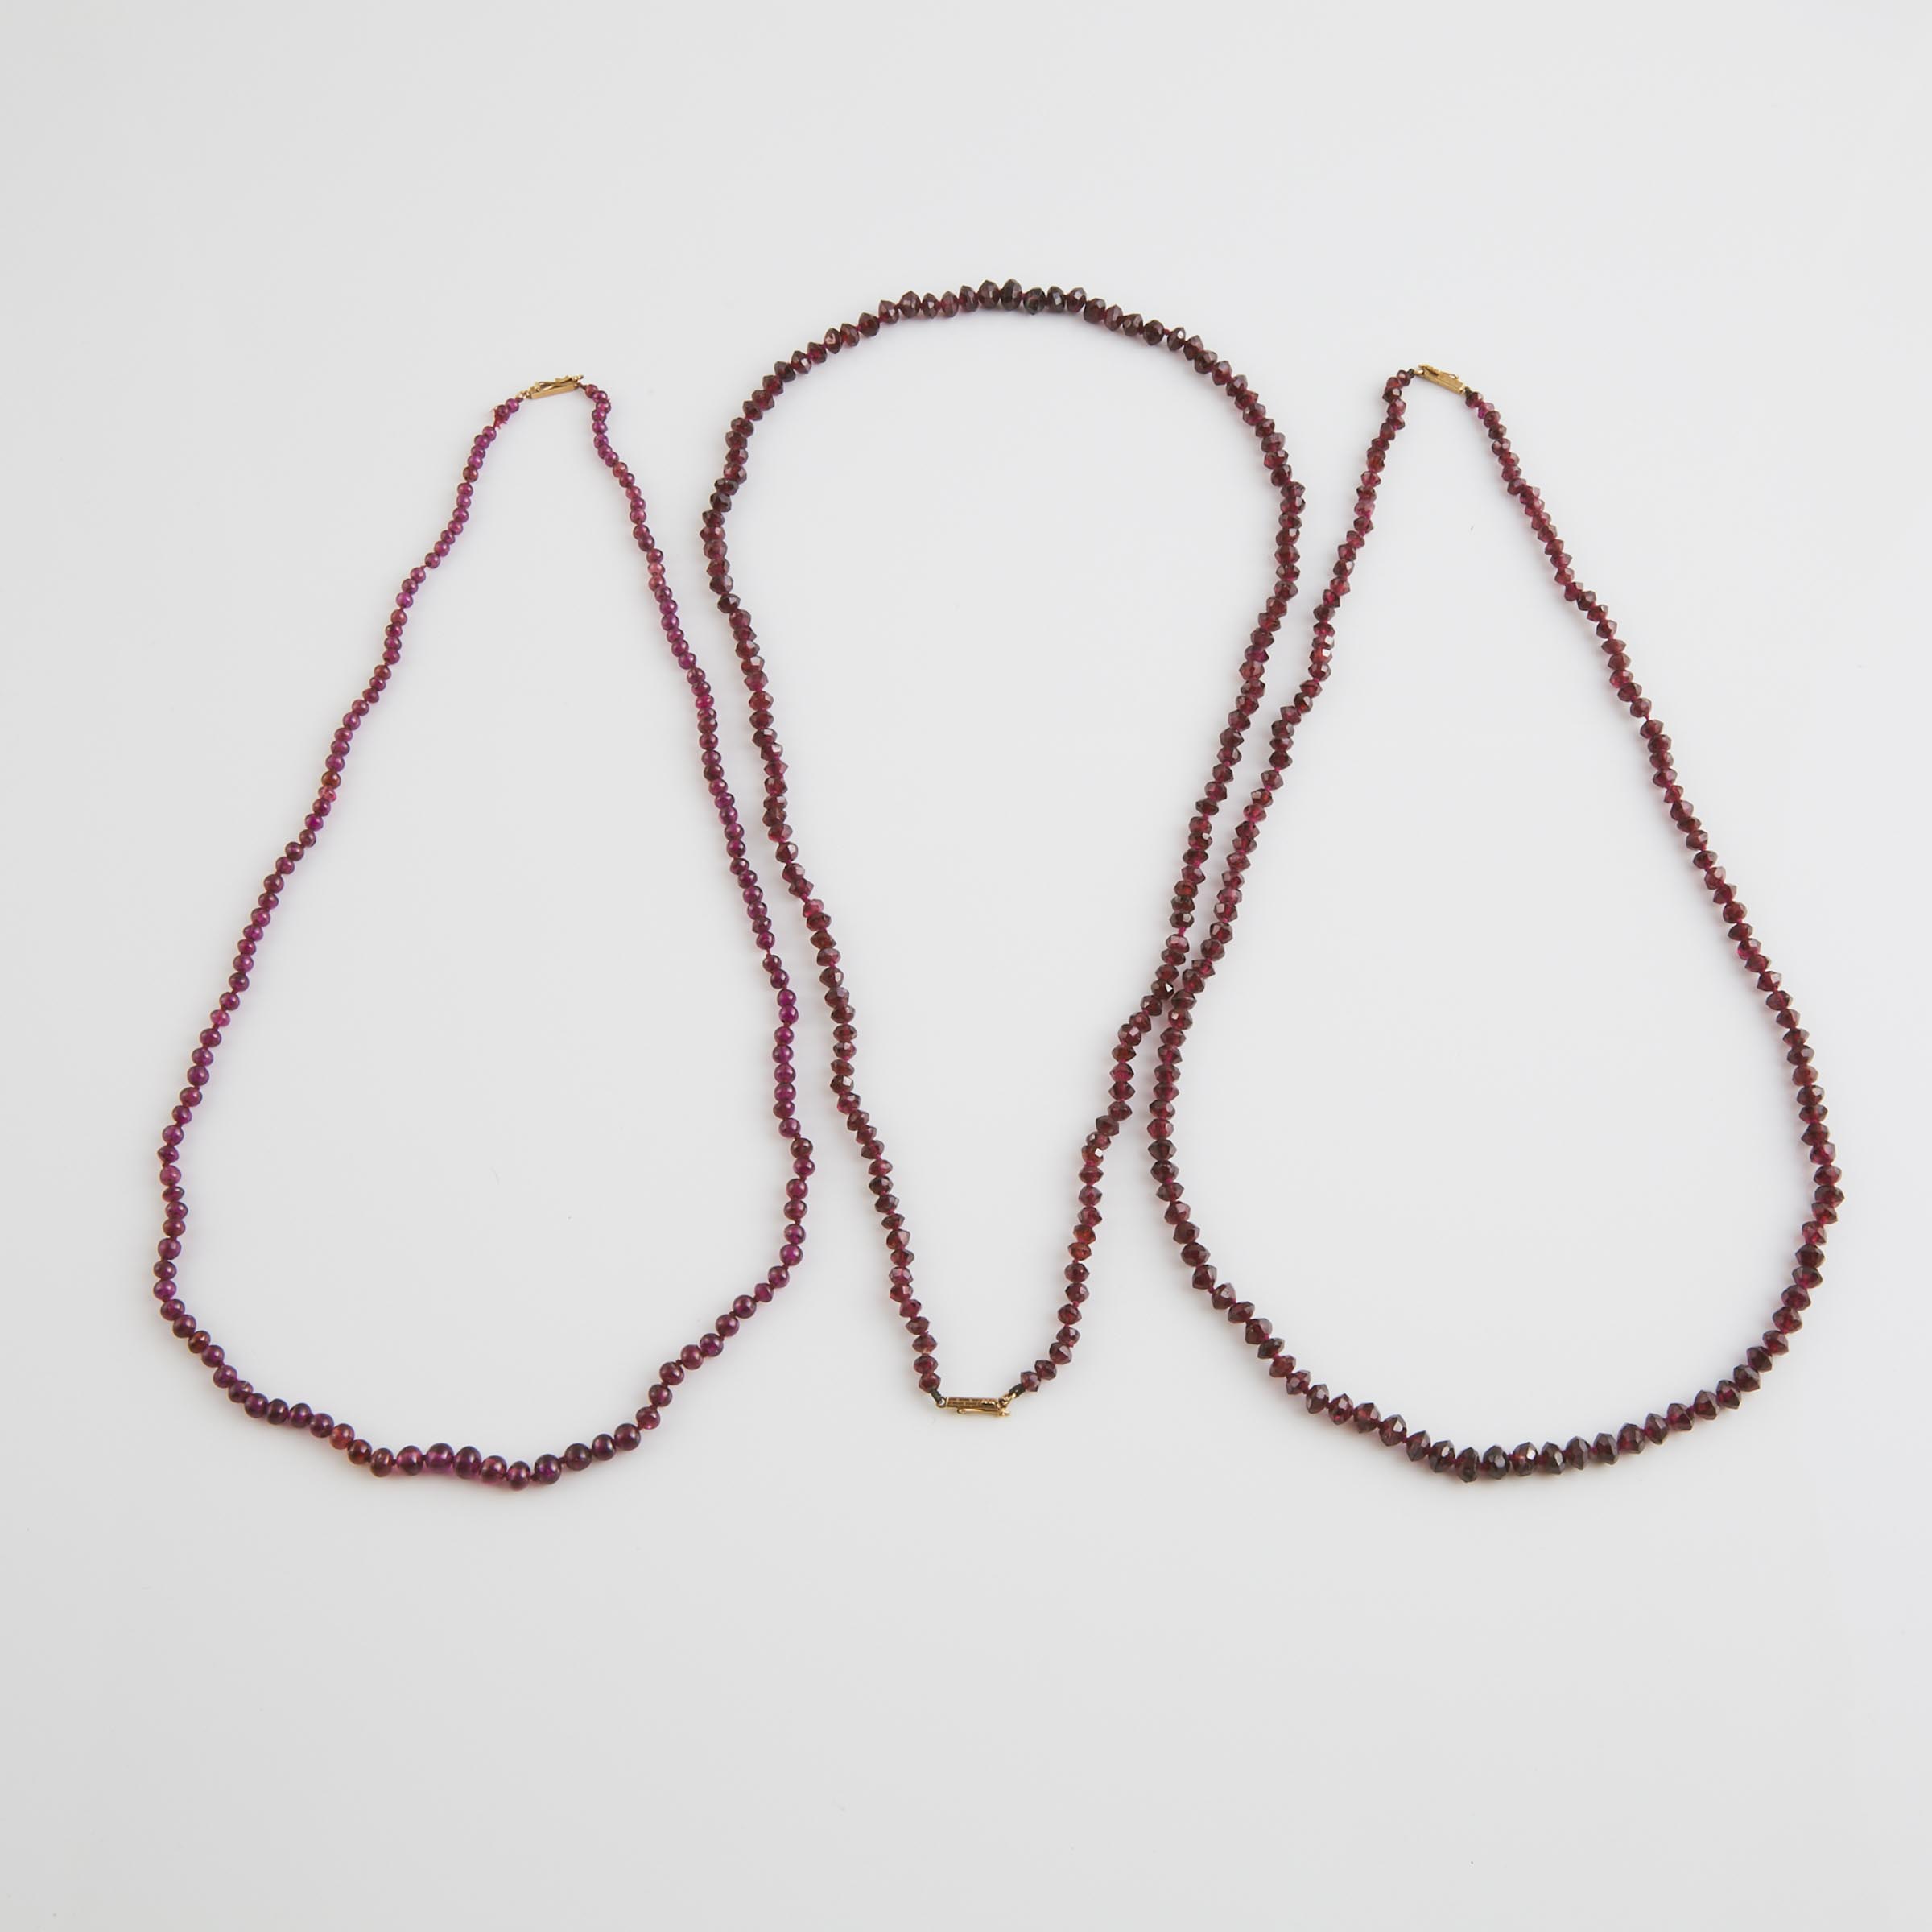 Three Graduated Garnet Bead Necklaces